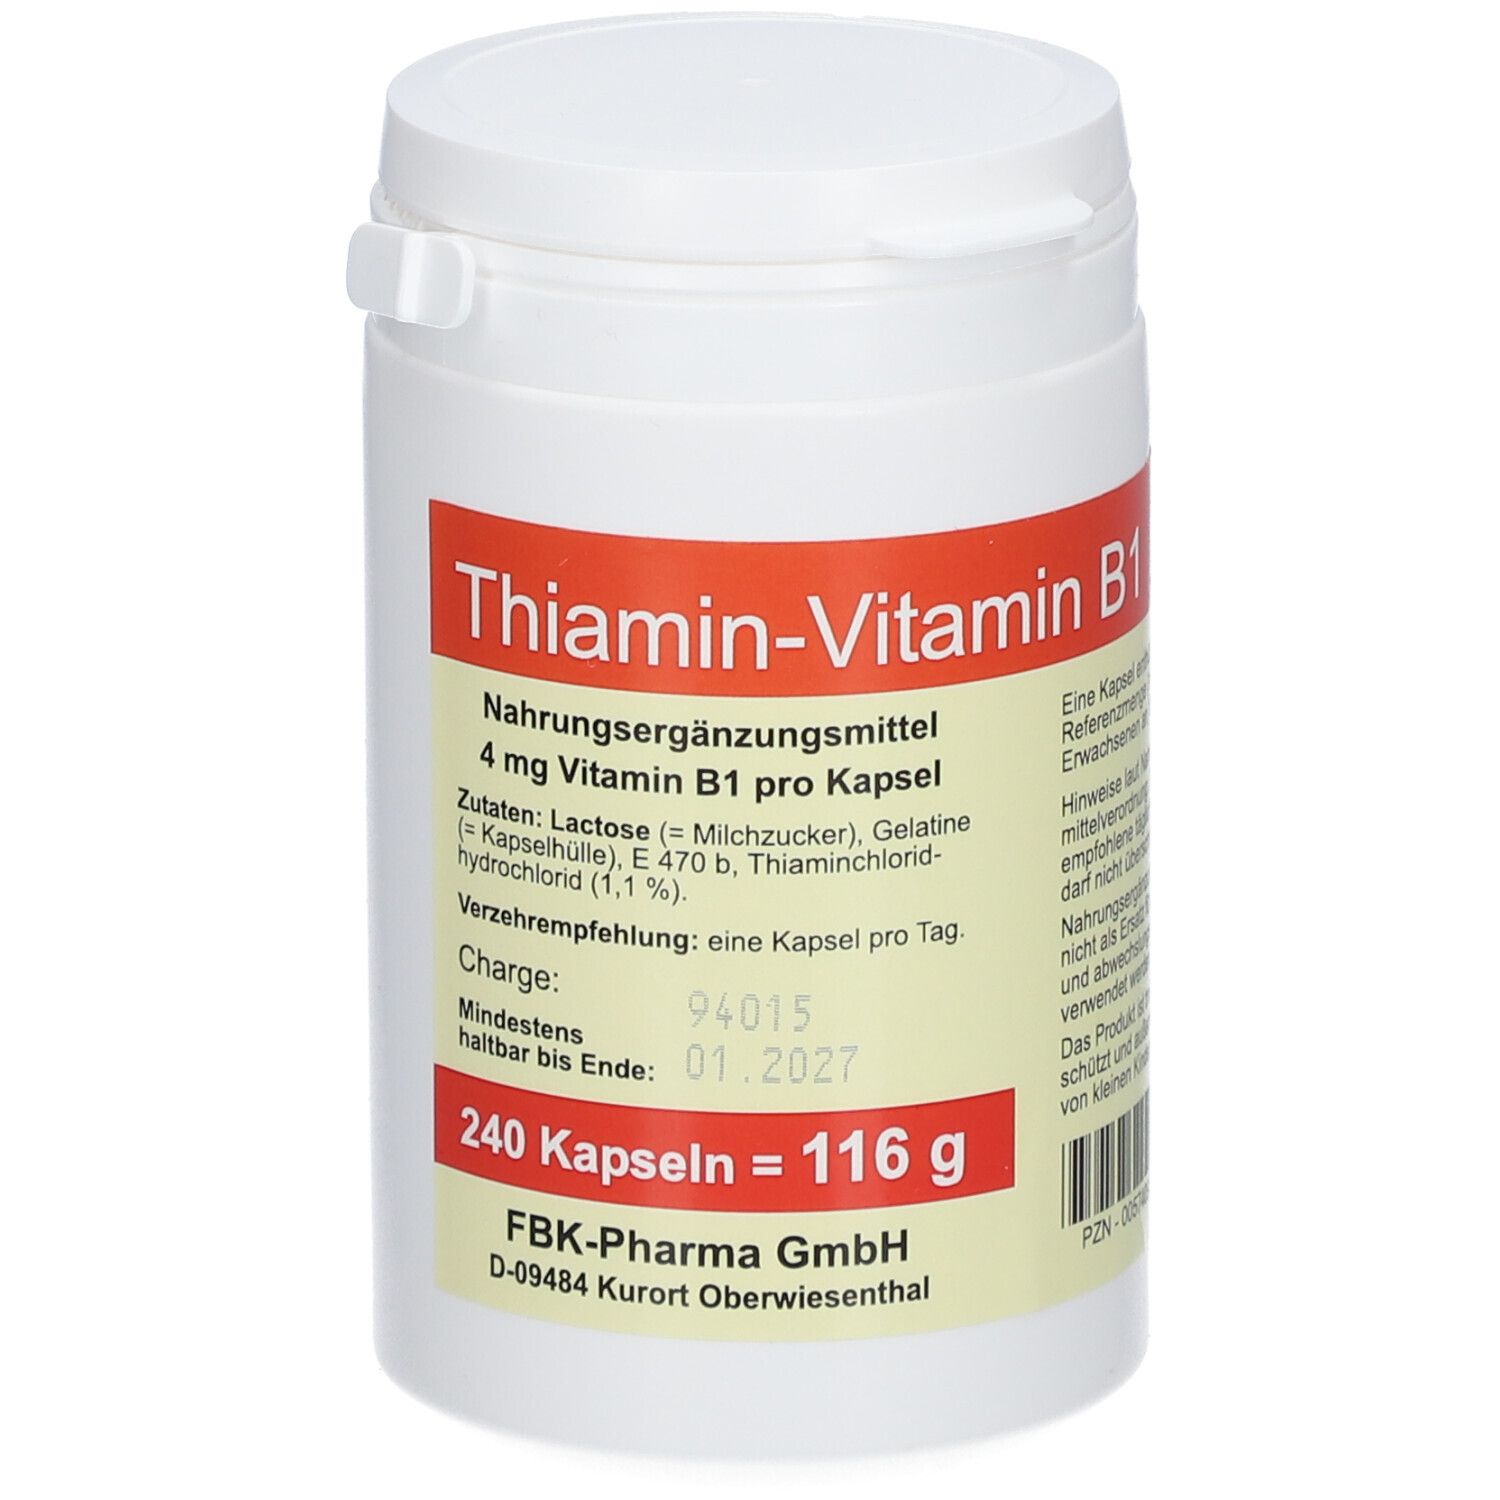 Thiamin vitamin B1